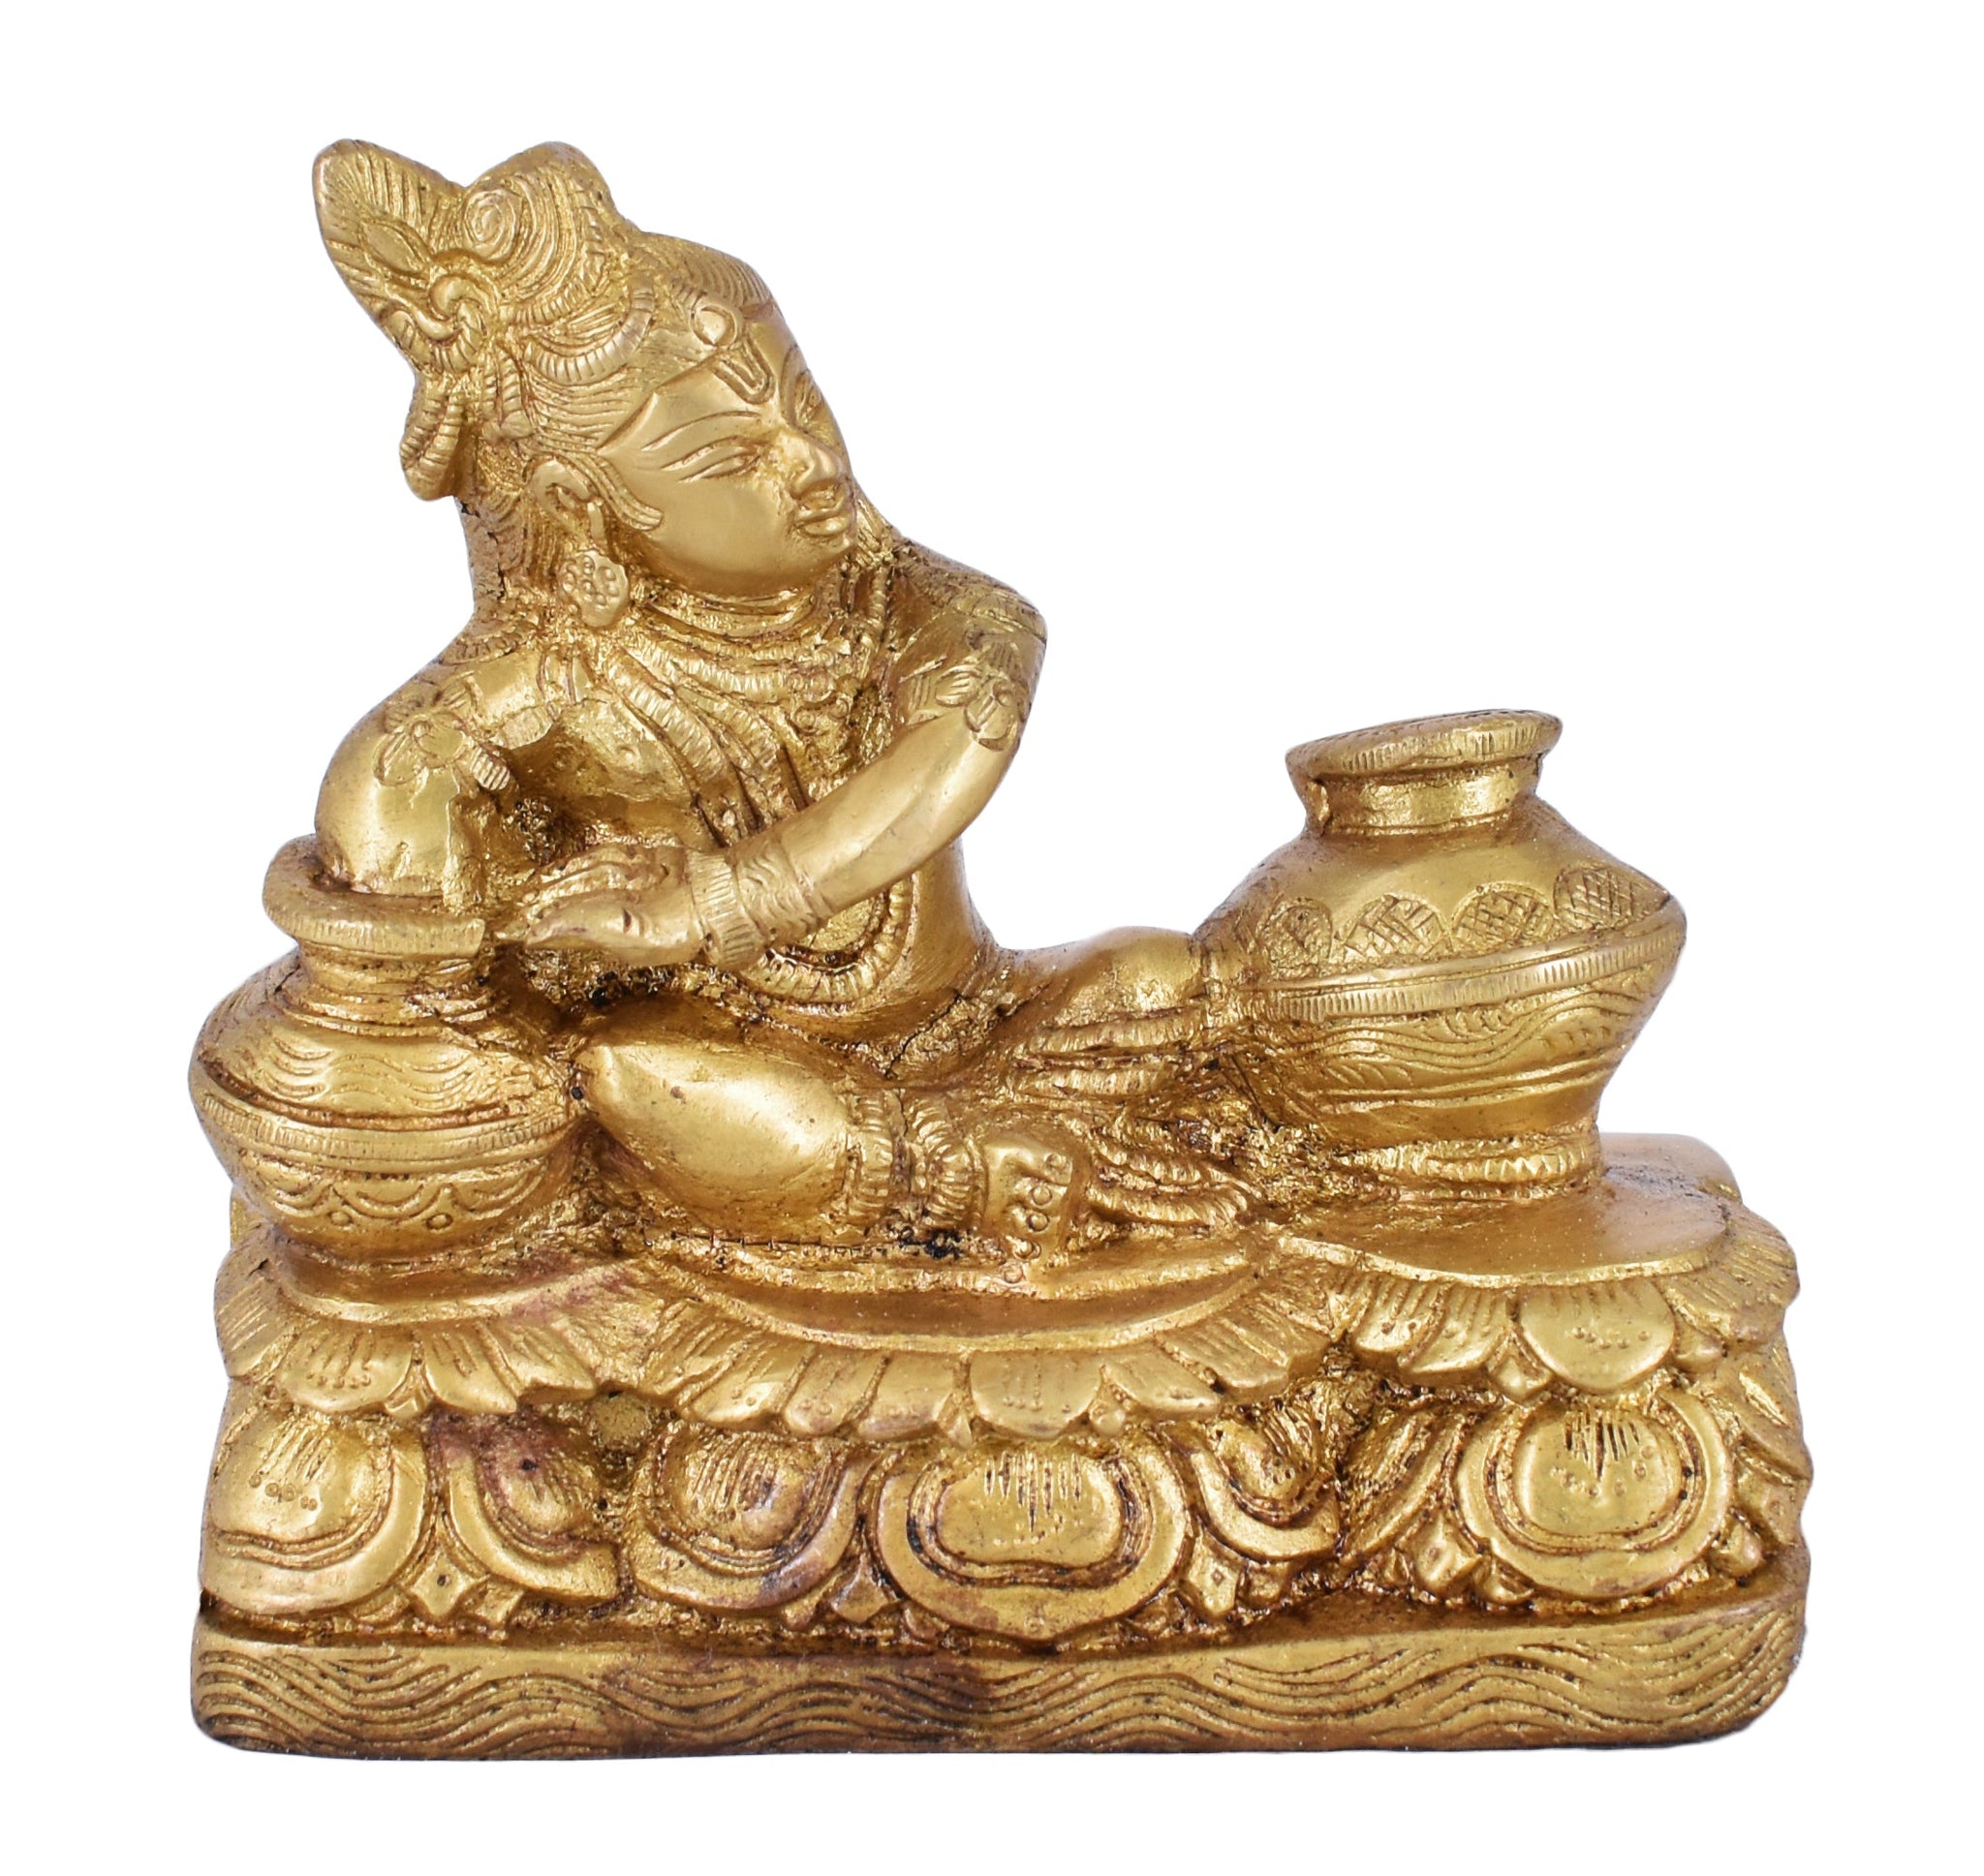 Hindu God Idols, Brass Statues Indian Home Decor